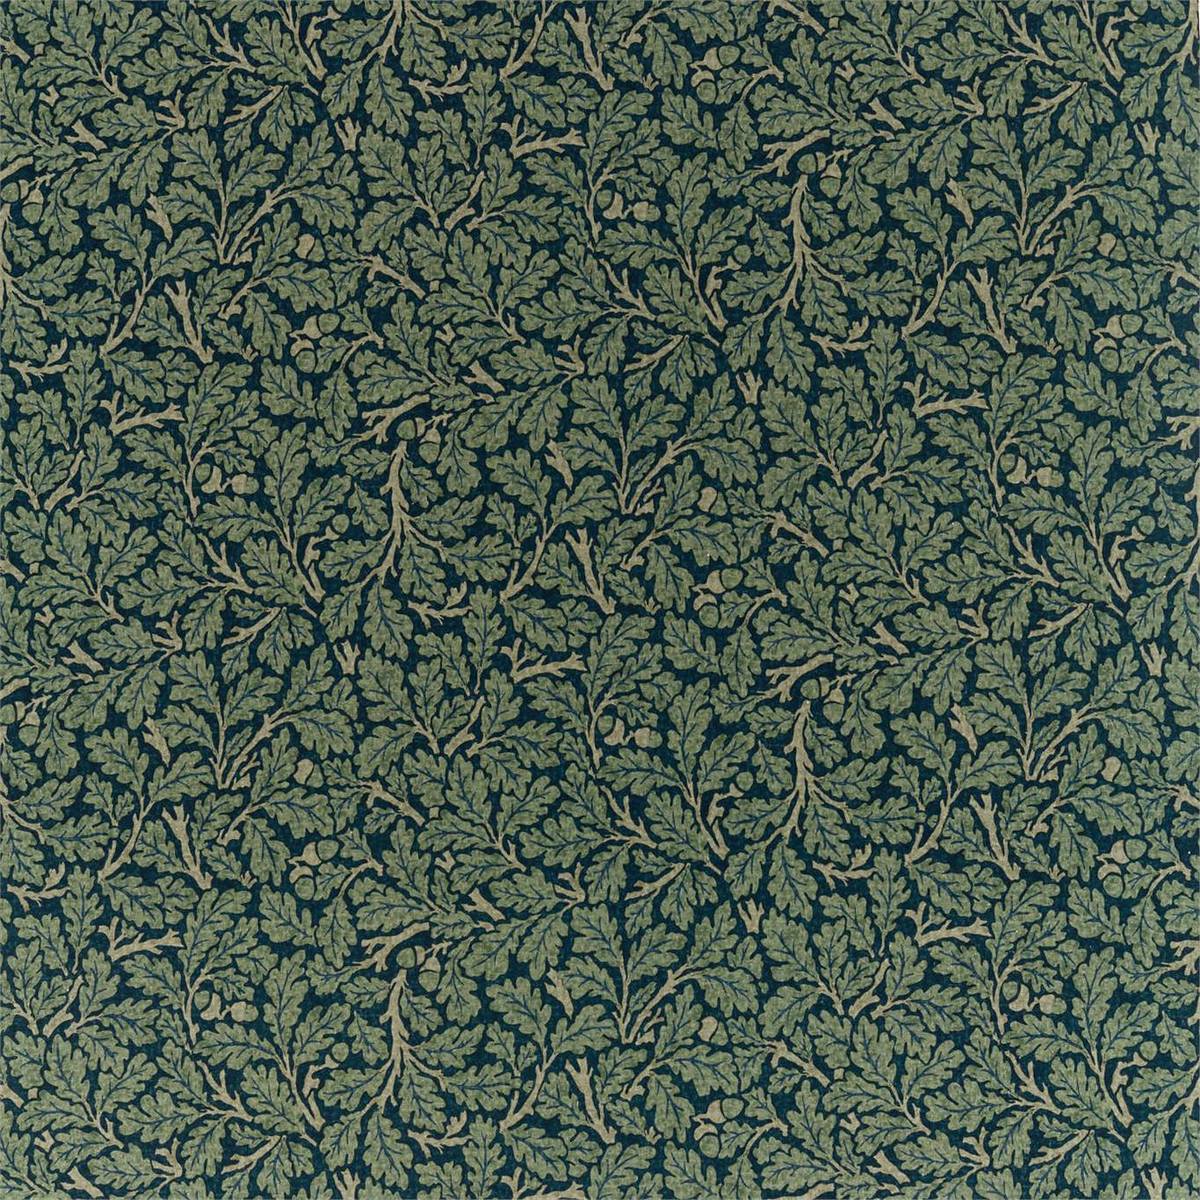 Oak Teal/Slate Fabric by William Morris & Co.